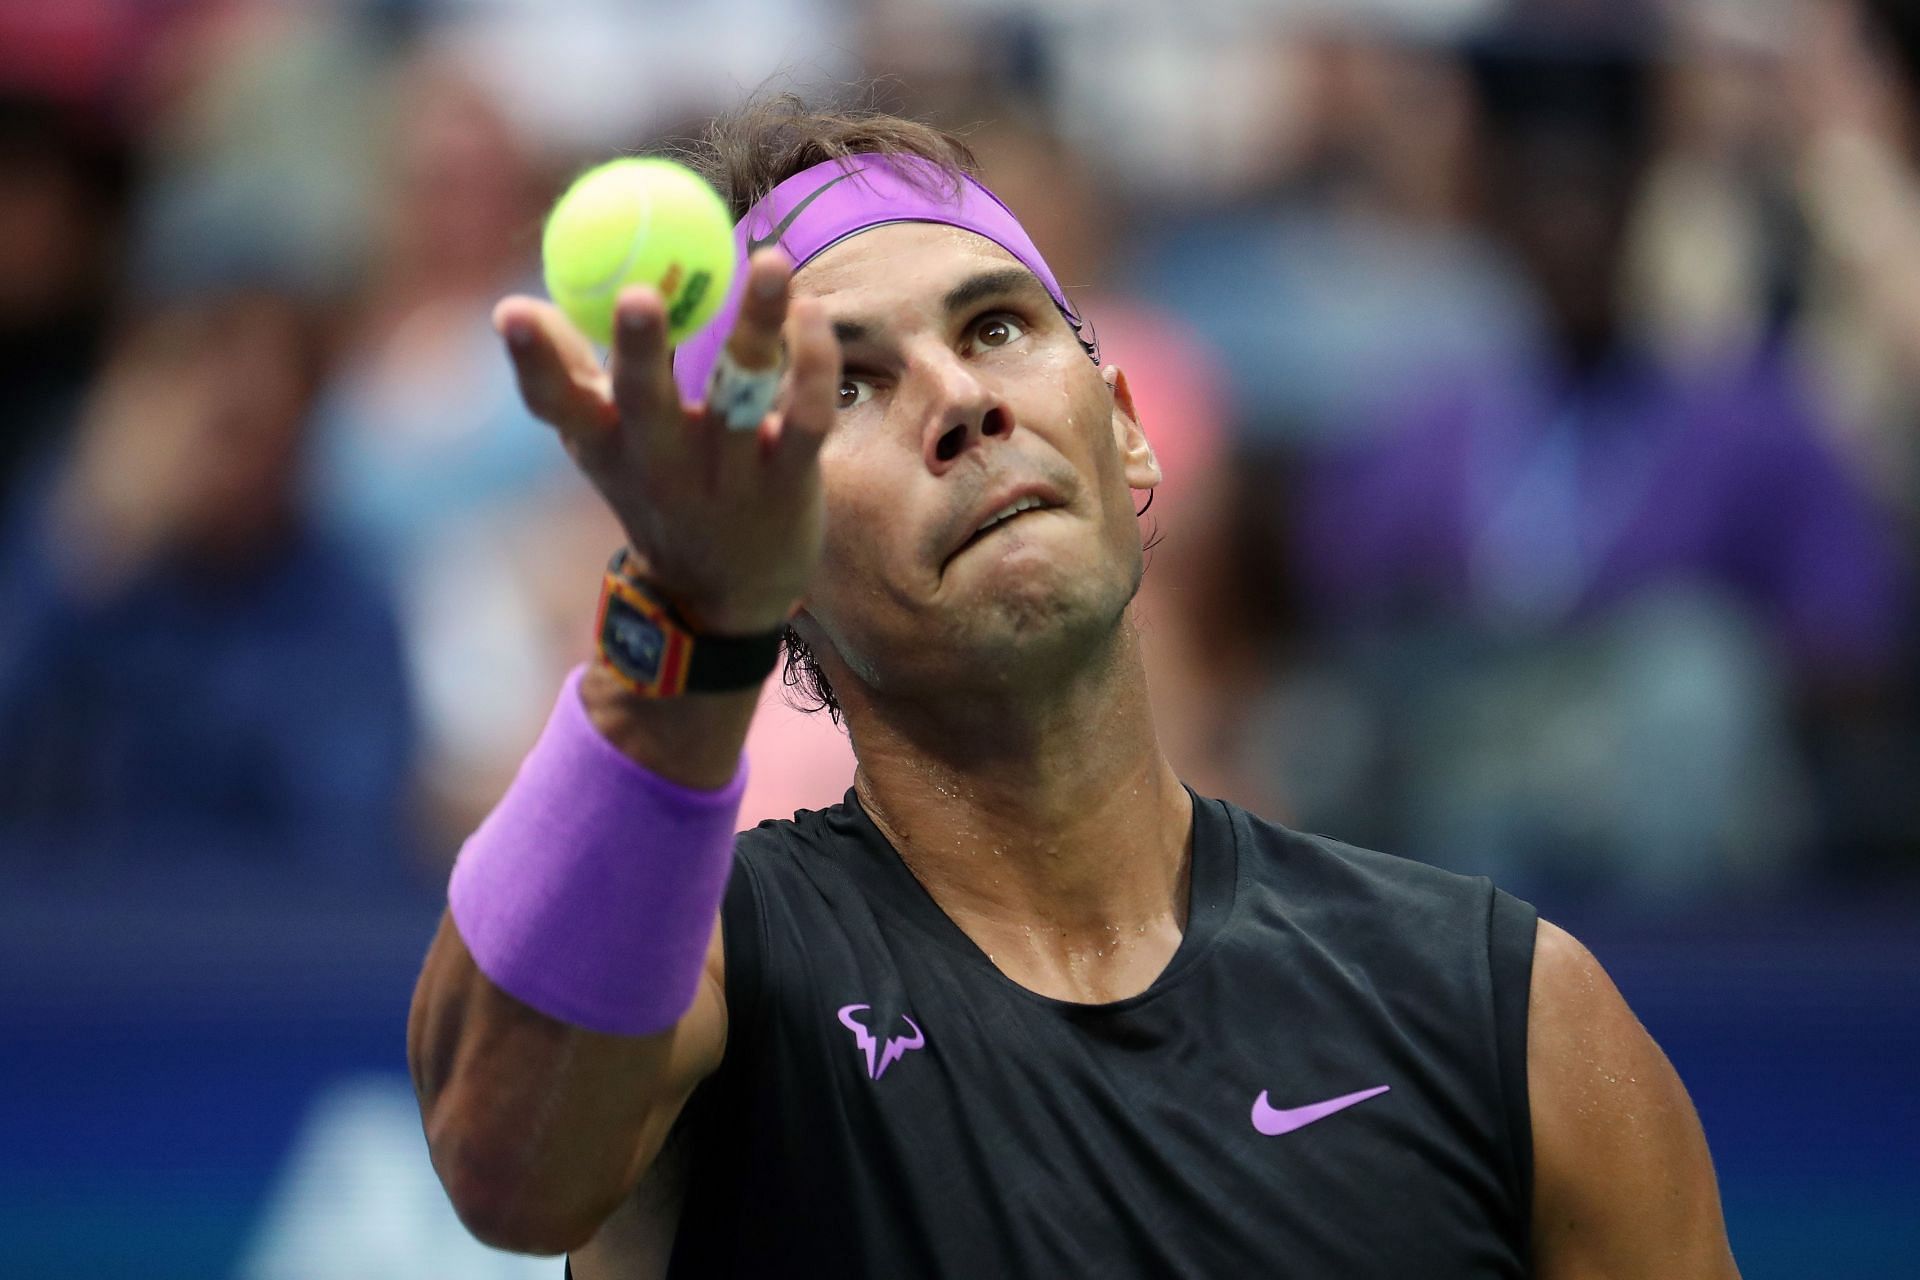 Rafael Nadal at the 2019 US Open.